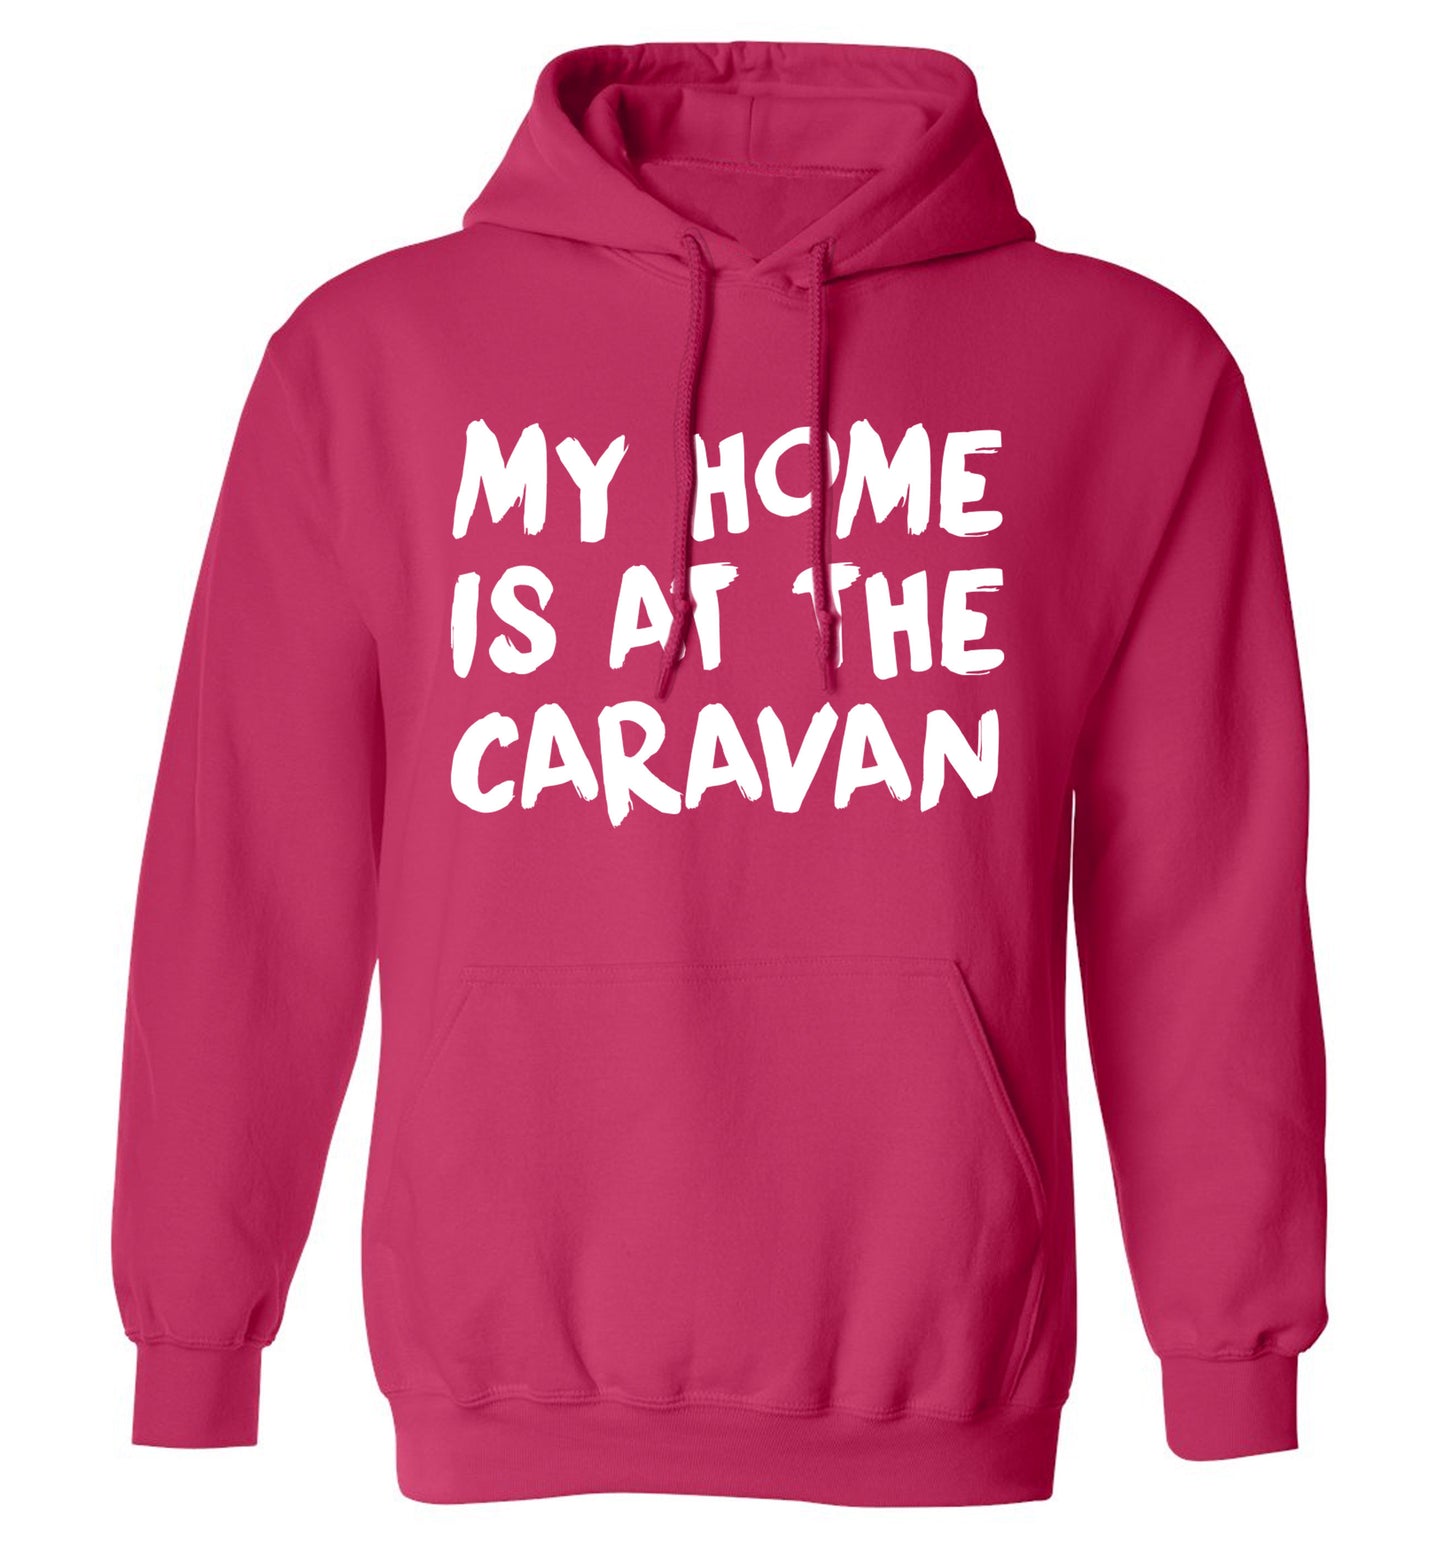 My home is at the caravan adults unisex pink hoodie 2XL